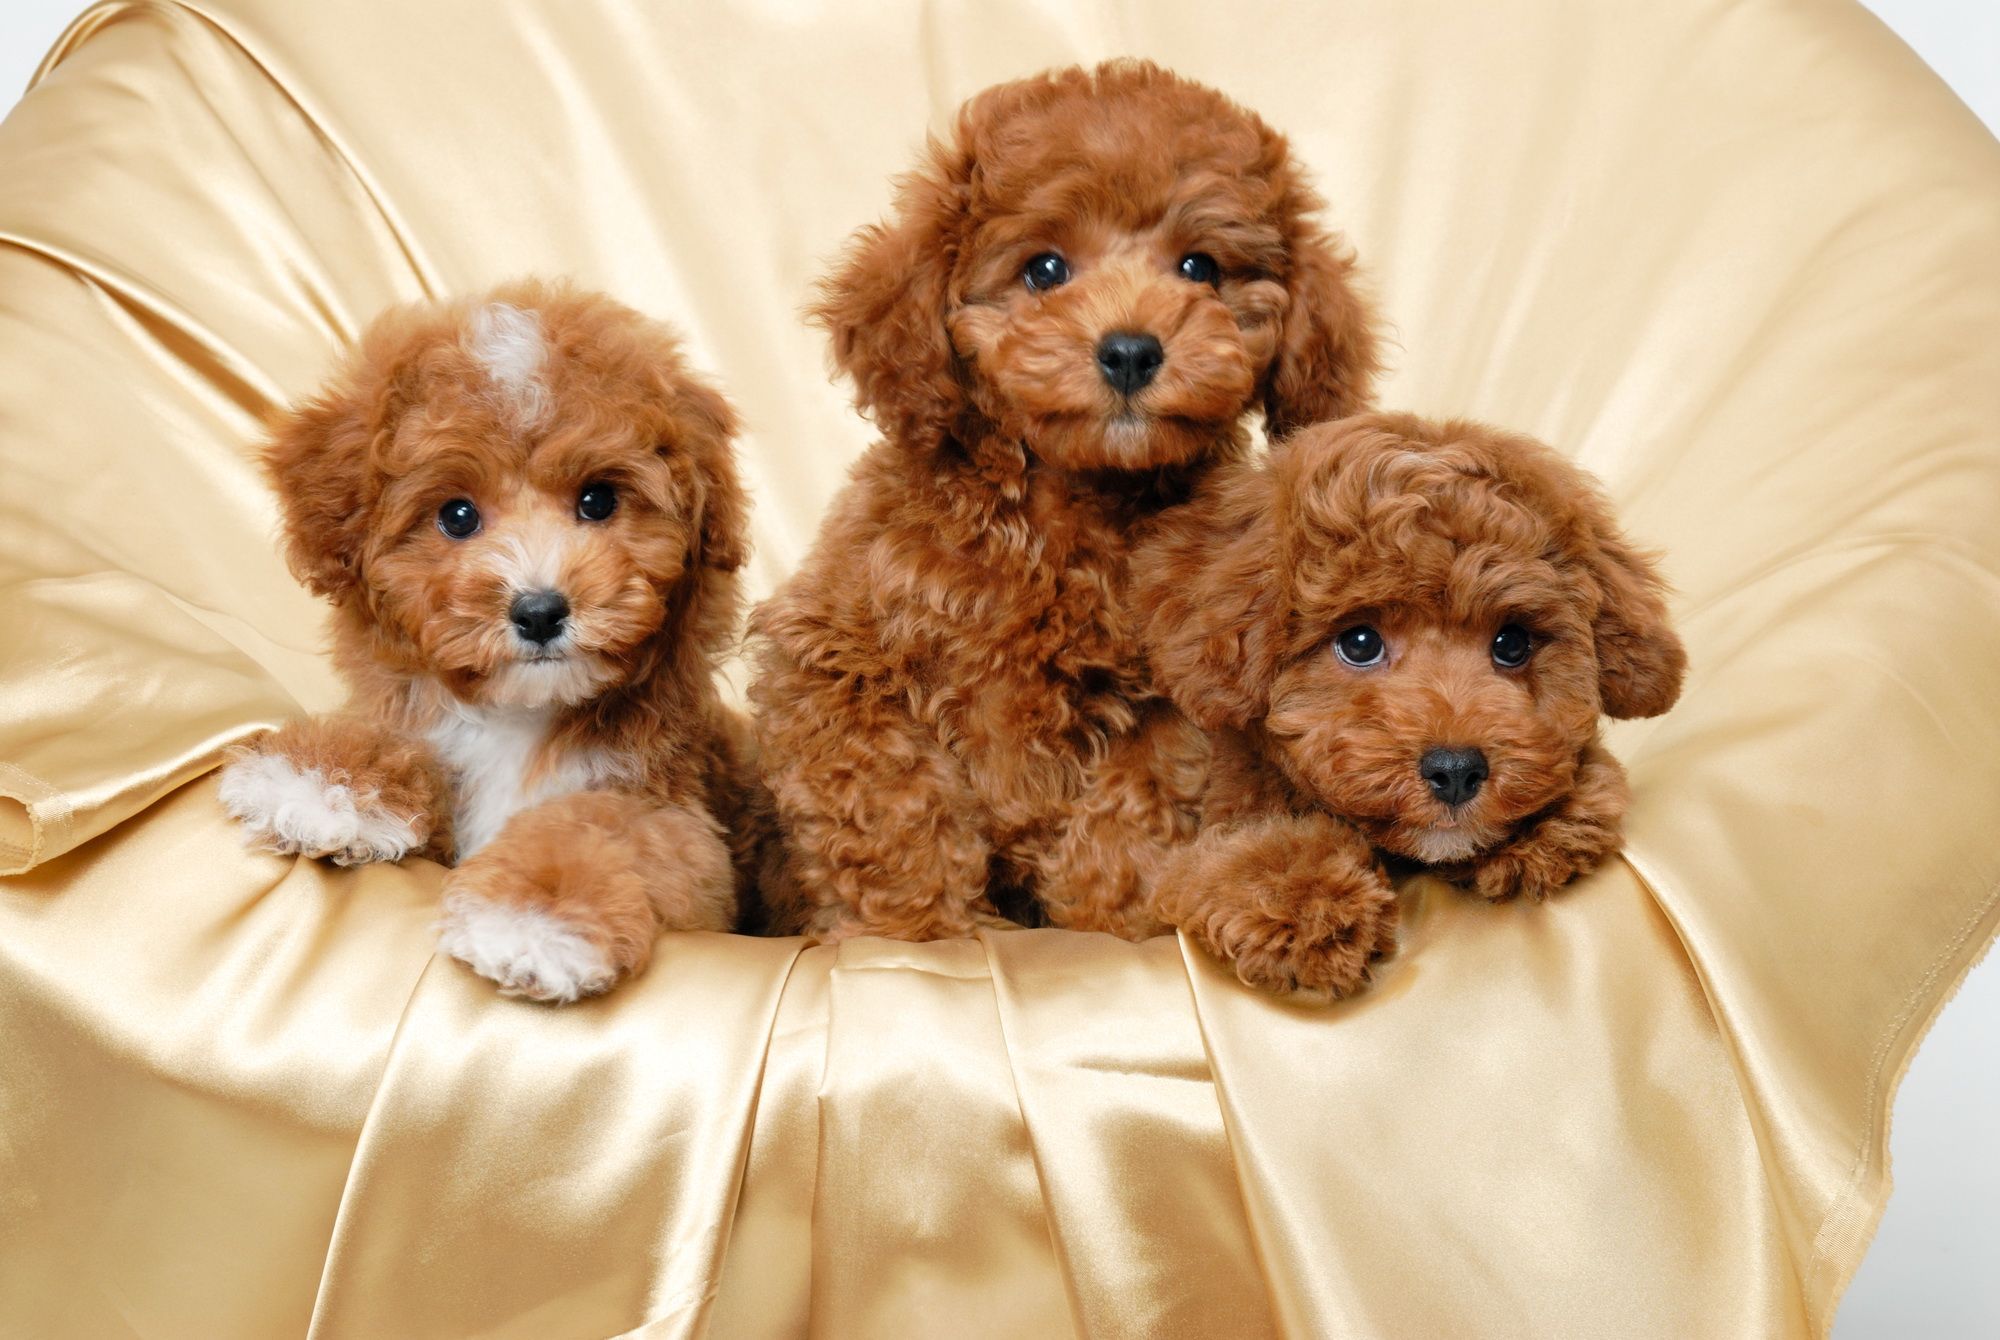 HD Cute Puppies Wallpaper. Download Free. Cute puppy wallpaper, Poodle puppy, Poodle dog